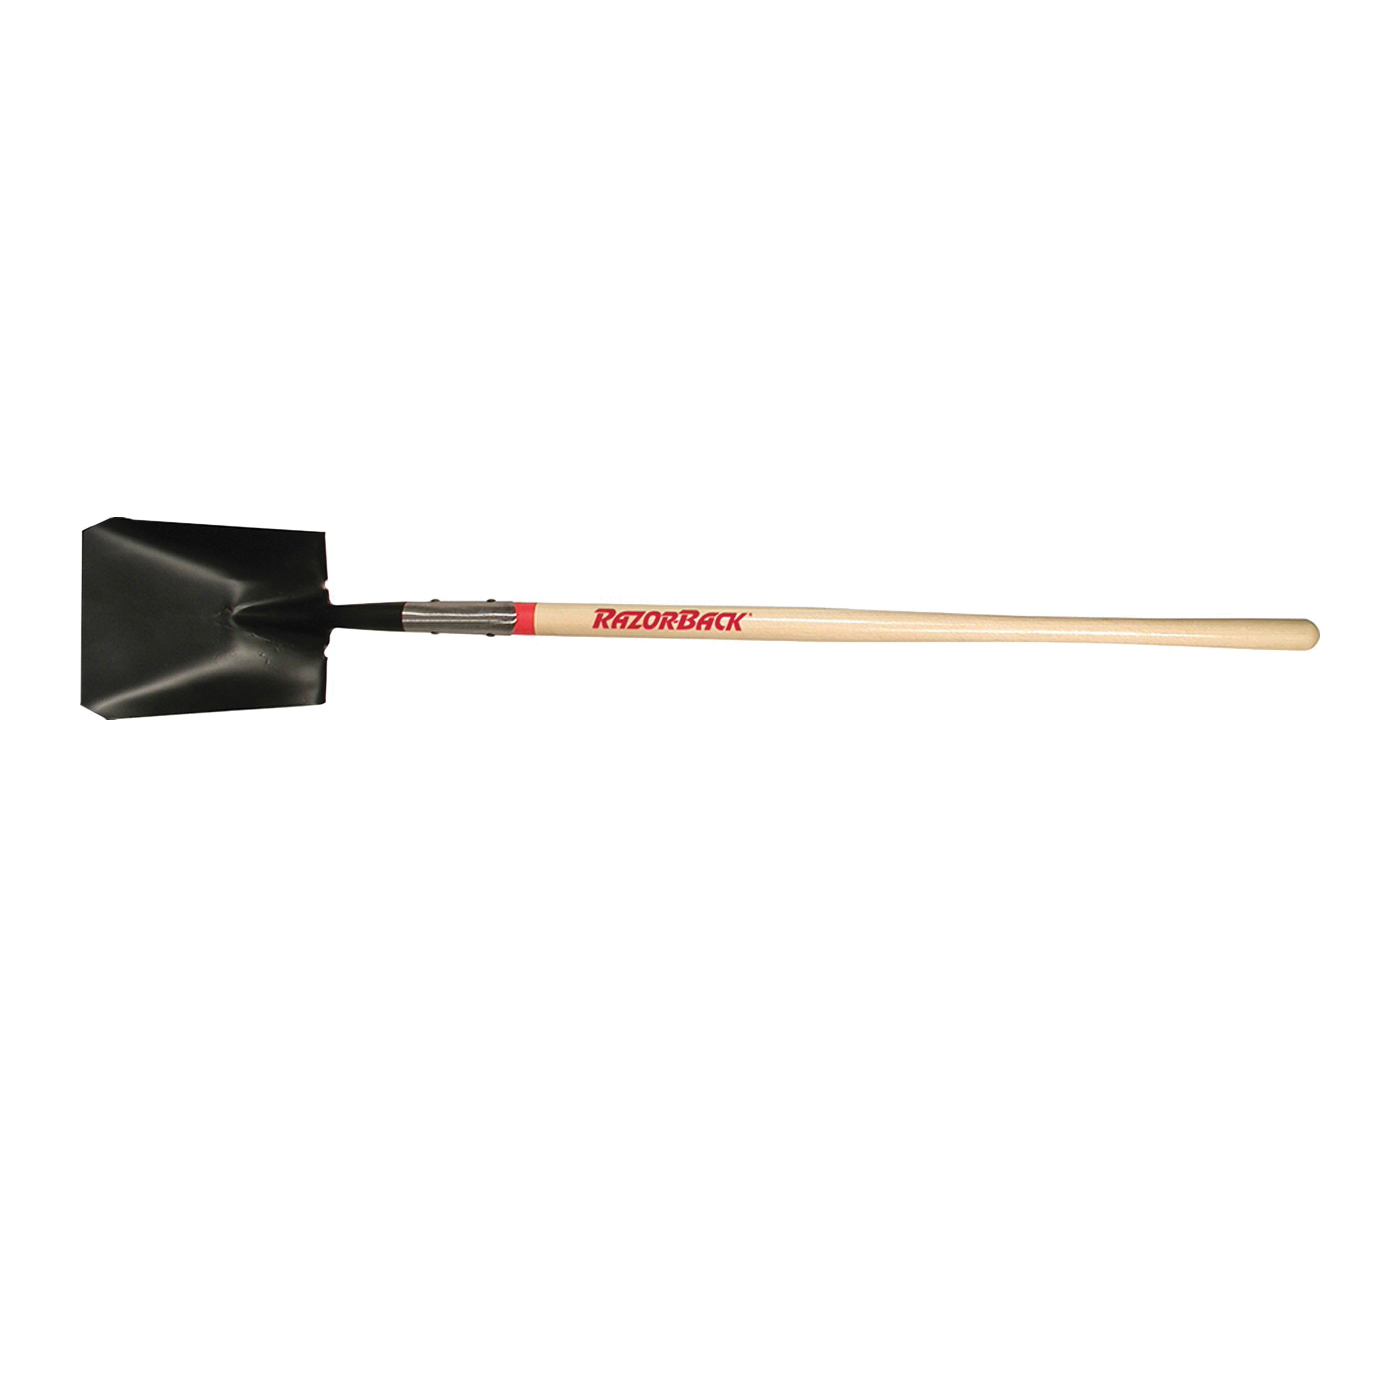 44124 Handled Transfer Shovel with Tab Socket, 9-1/2 in W Blade, Steel Blade, Wood Handle, Straight Handle